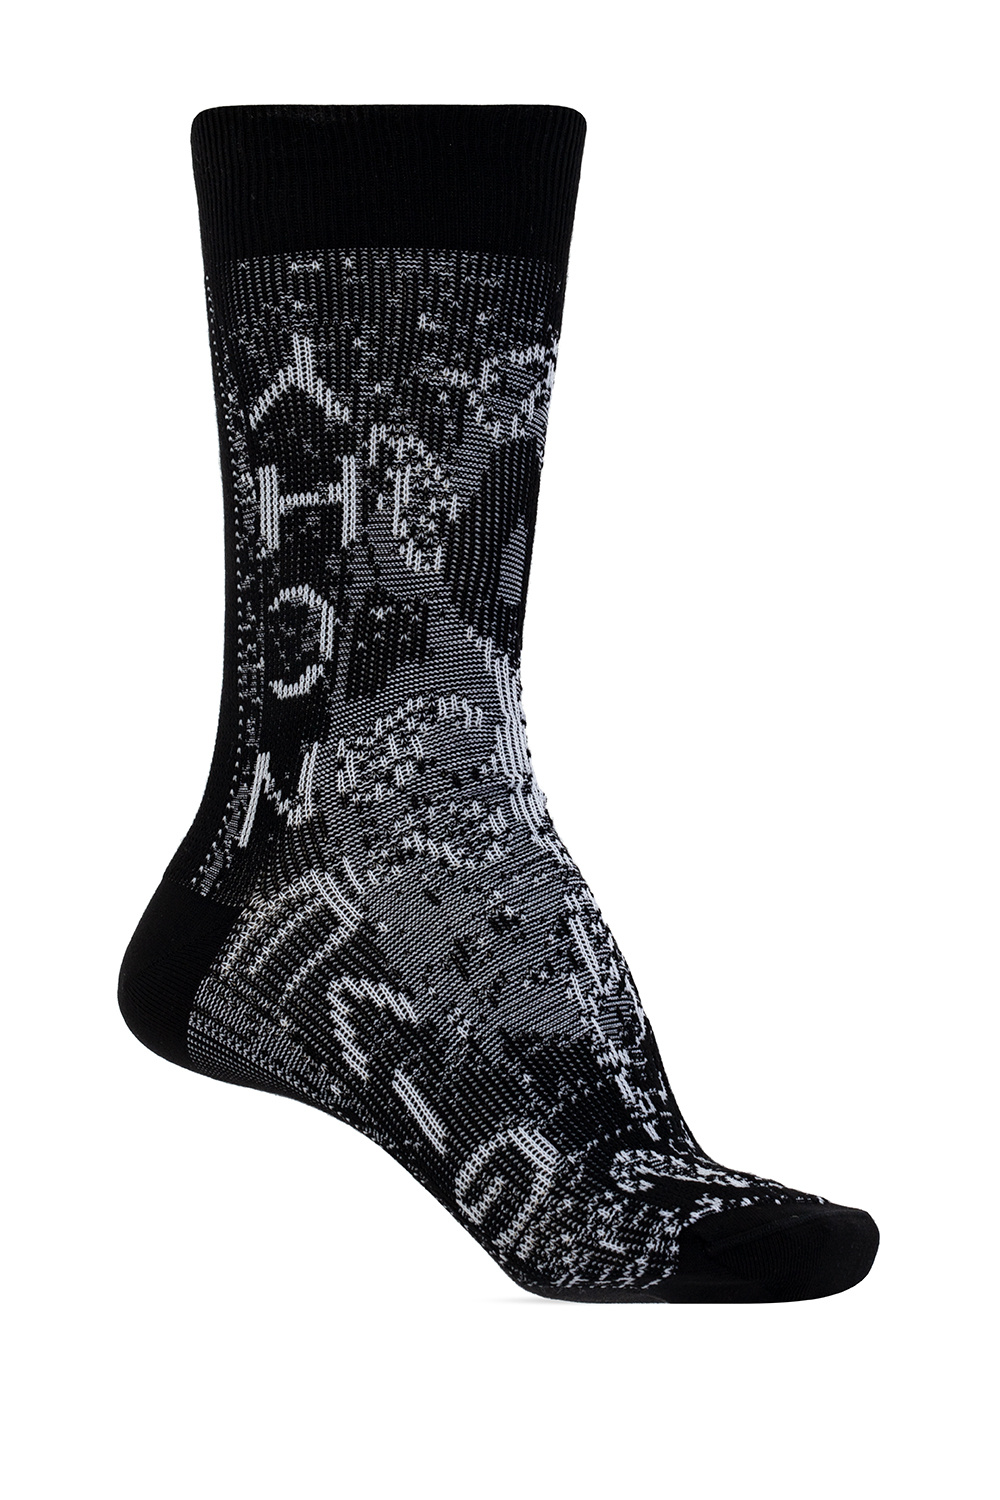 Givenchy Shorts for Men - Socks with logo Givenchy - IetpShops Canada